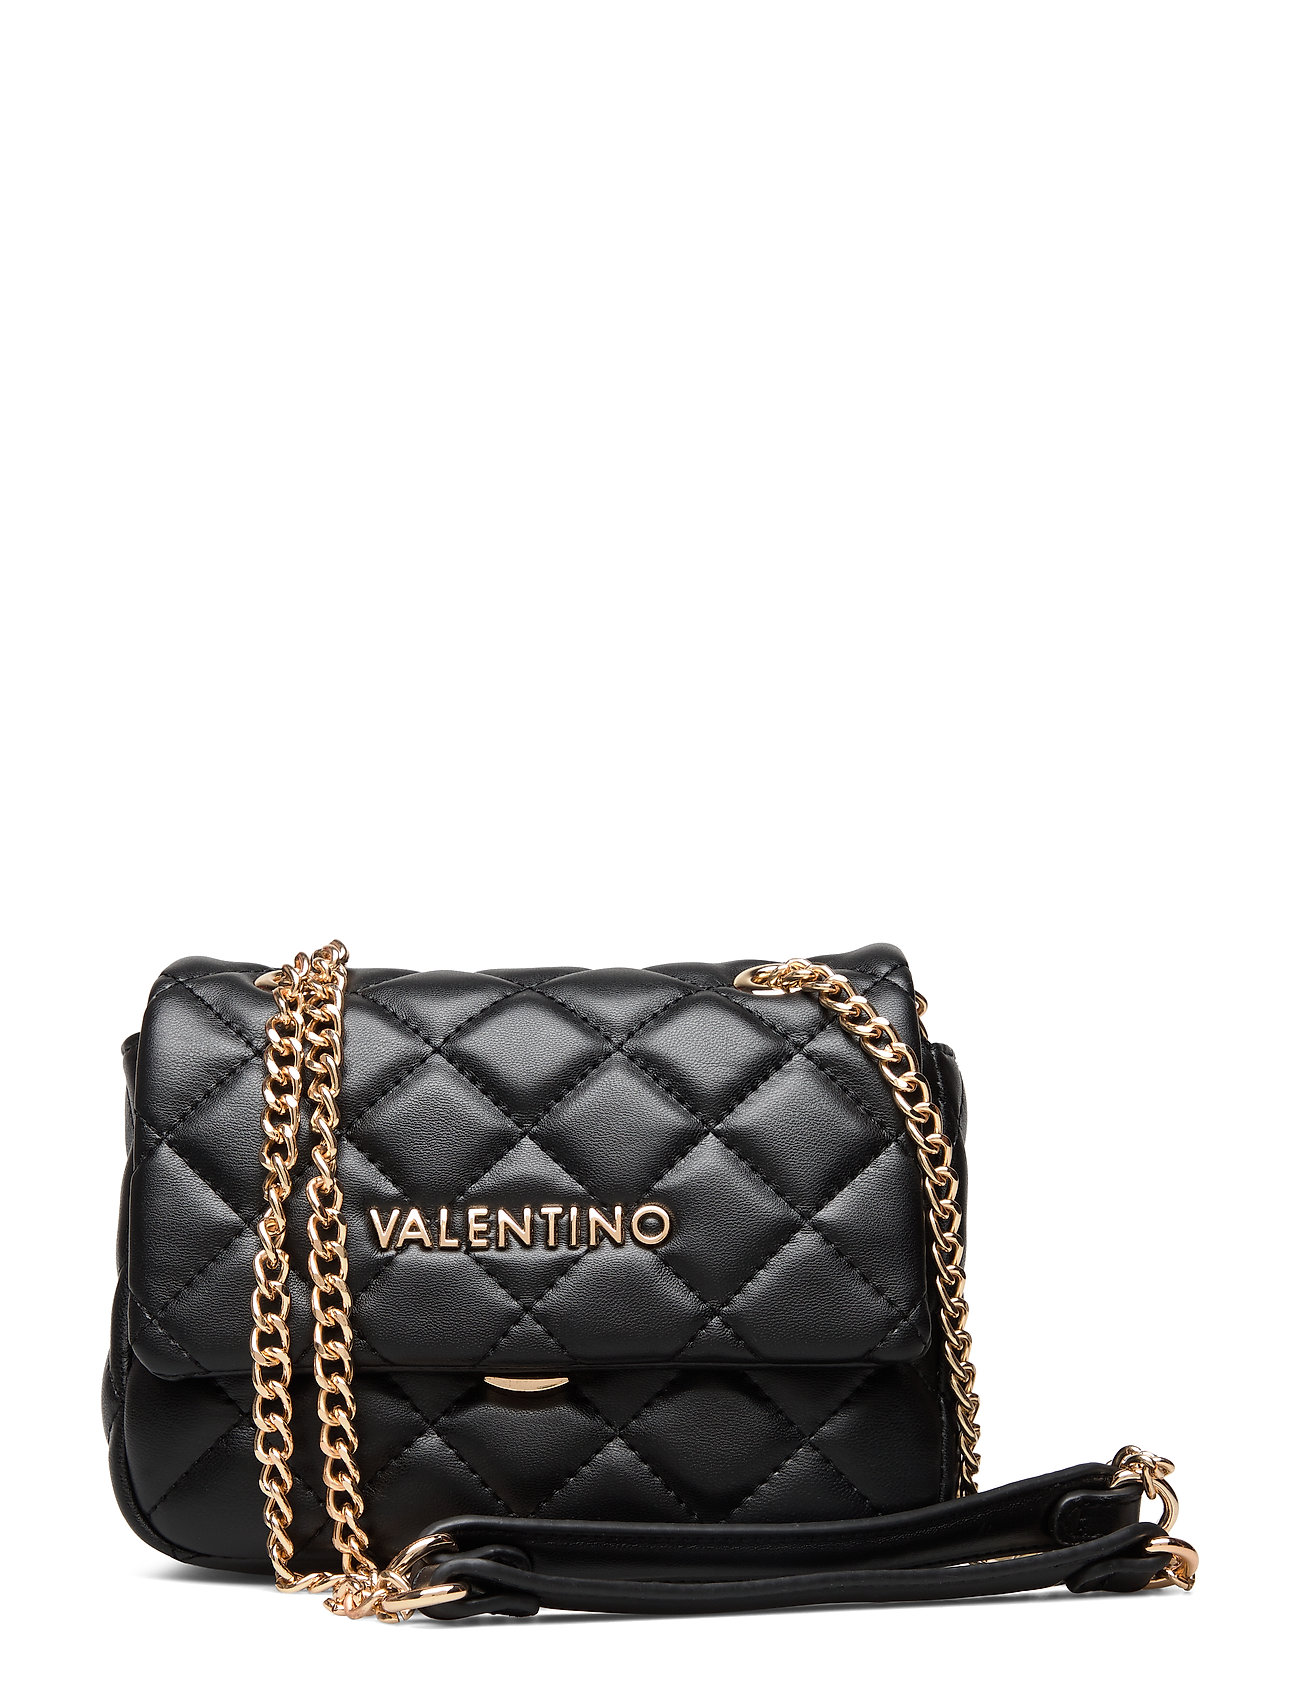 Valentino by Mario Valentino Ocarina black quilted cross body bag